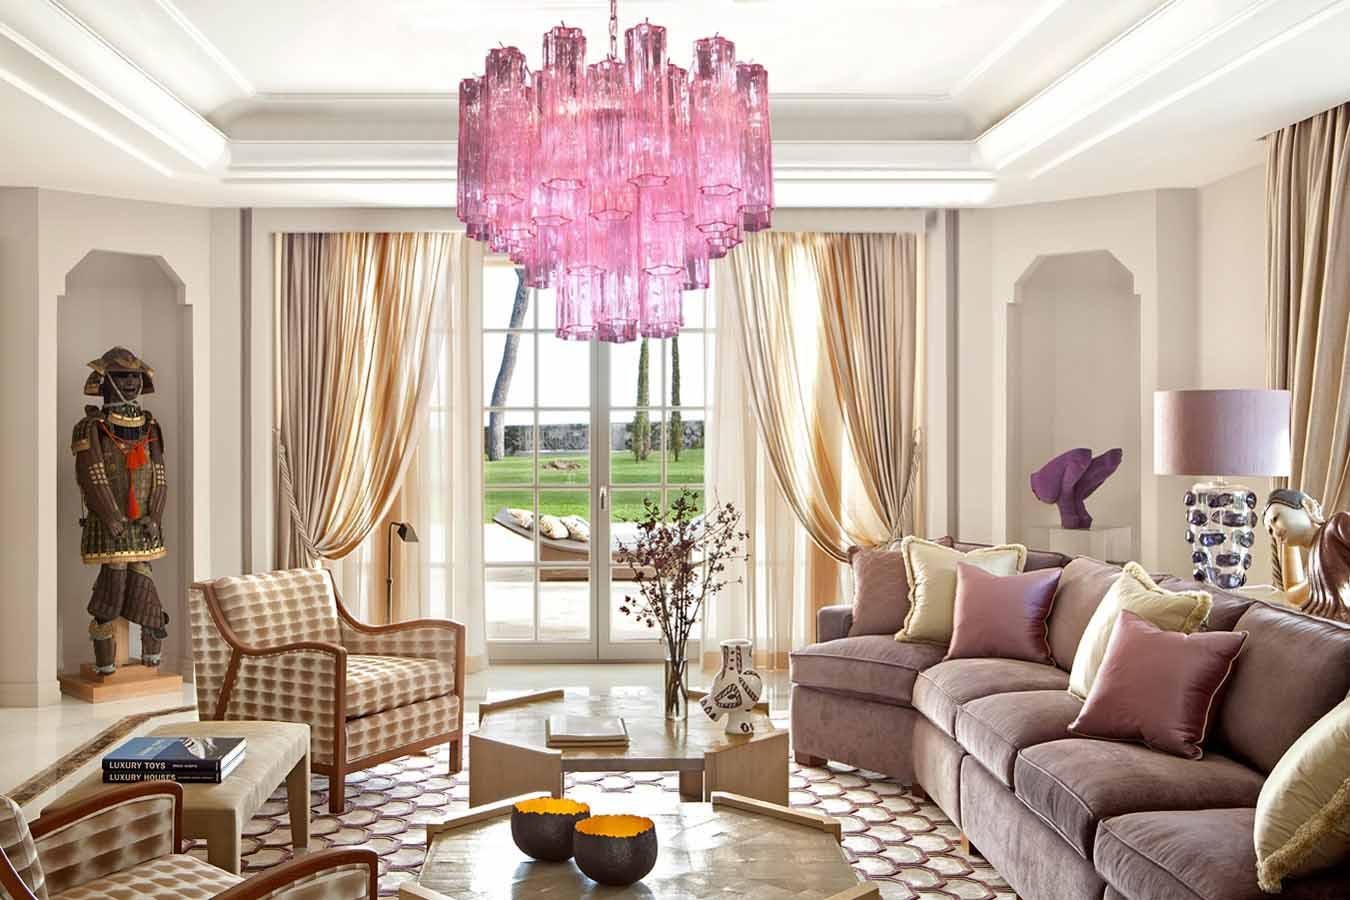 Mid-Century Modern Amazing Pink Tronchi Murano Glass Chandelier